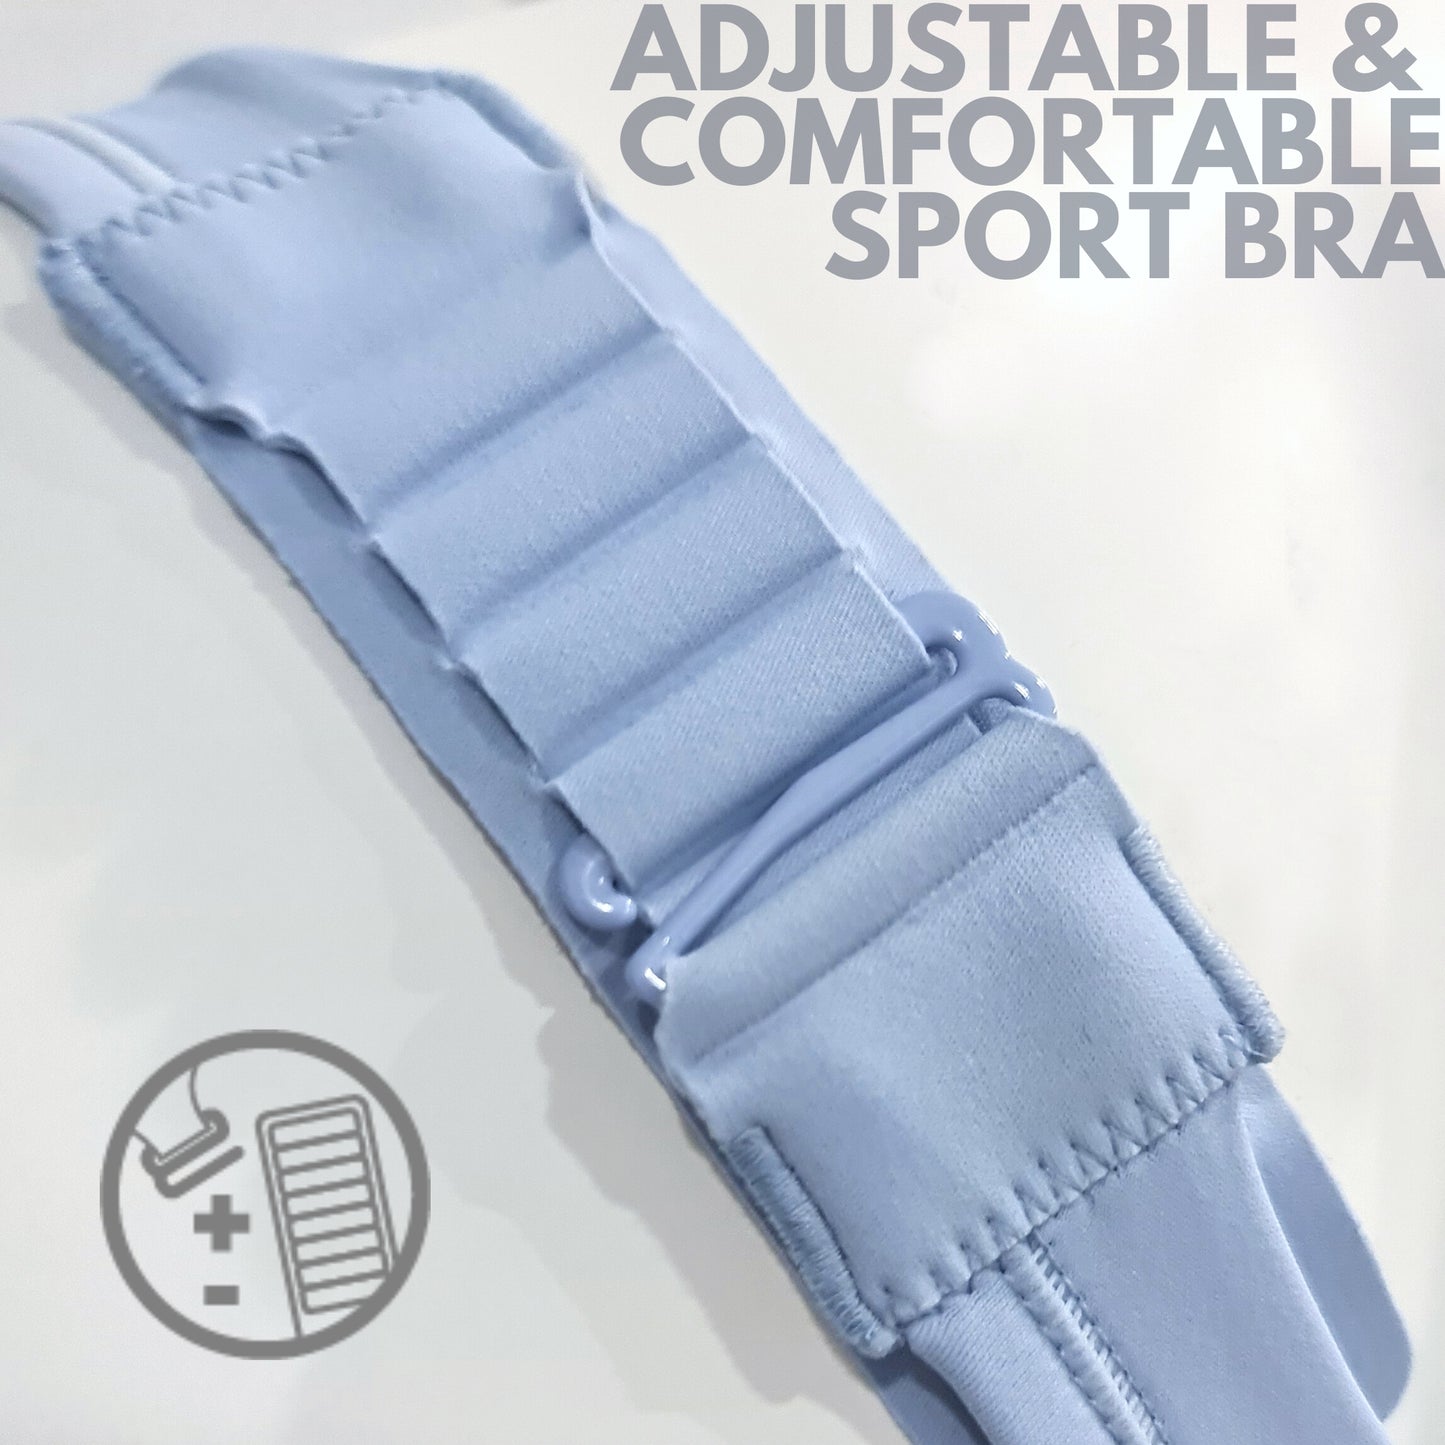 AVIVA Maximum Adjustable & Comfortable Sport Bra (81-6125)